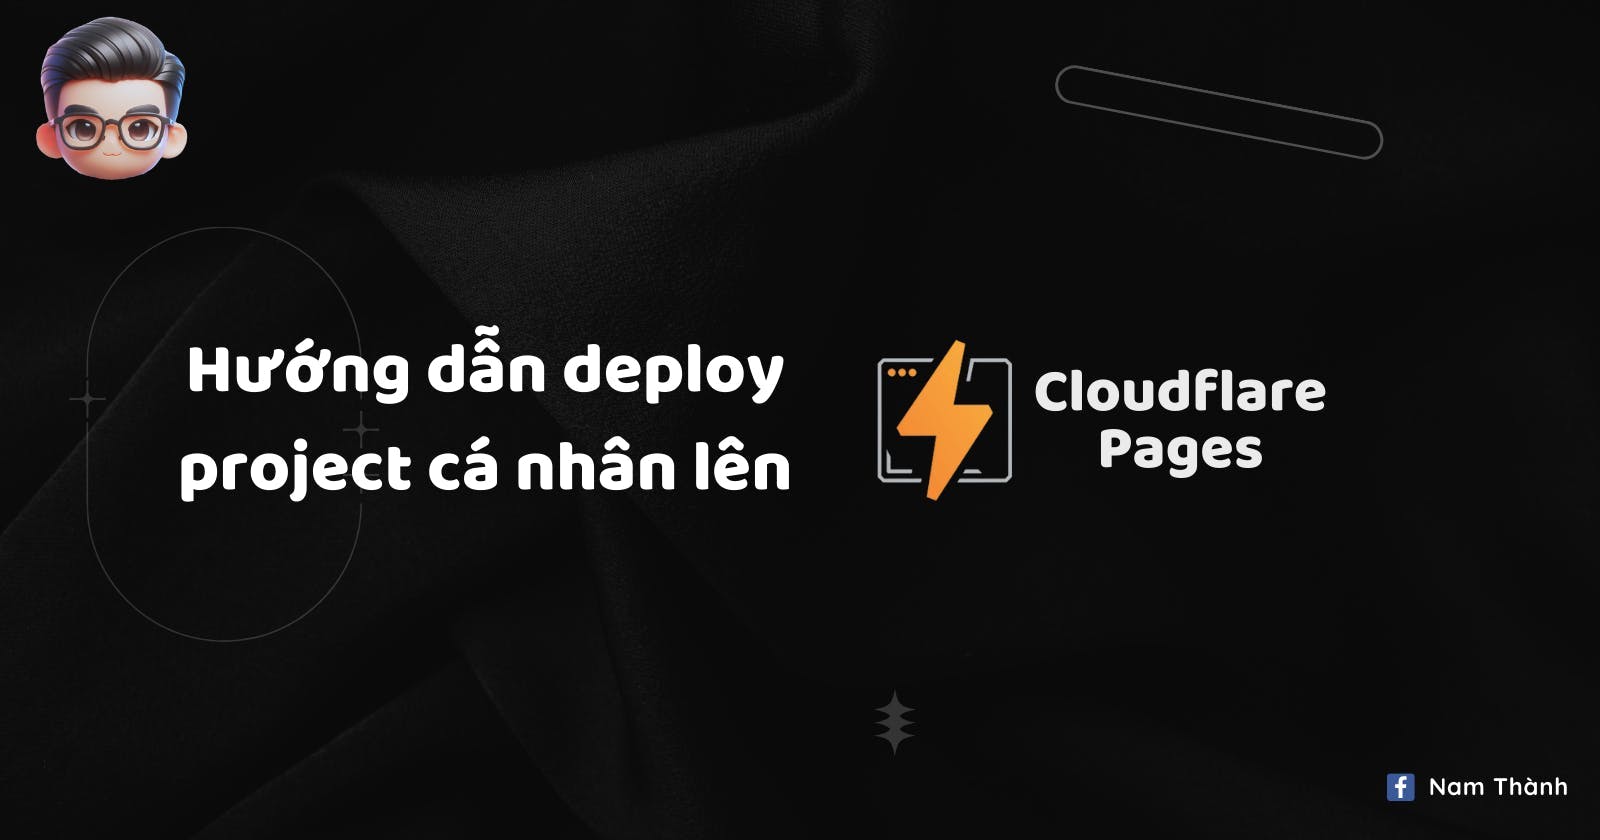 Hướng dẫn deploy project của bạn lên Cloudflare Pages